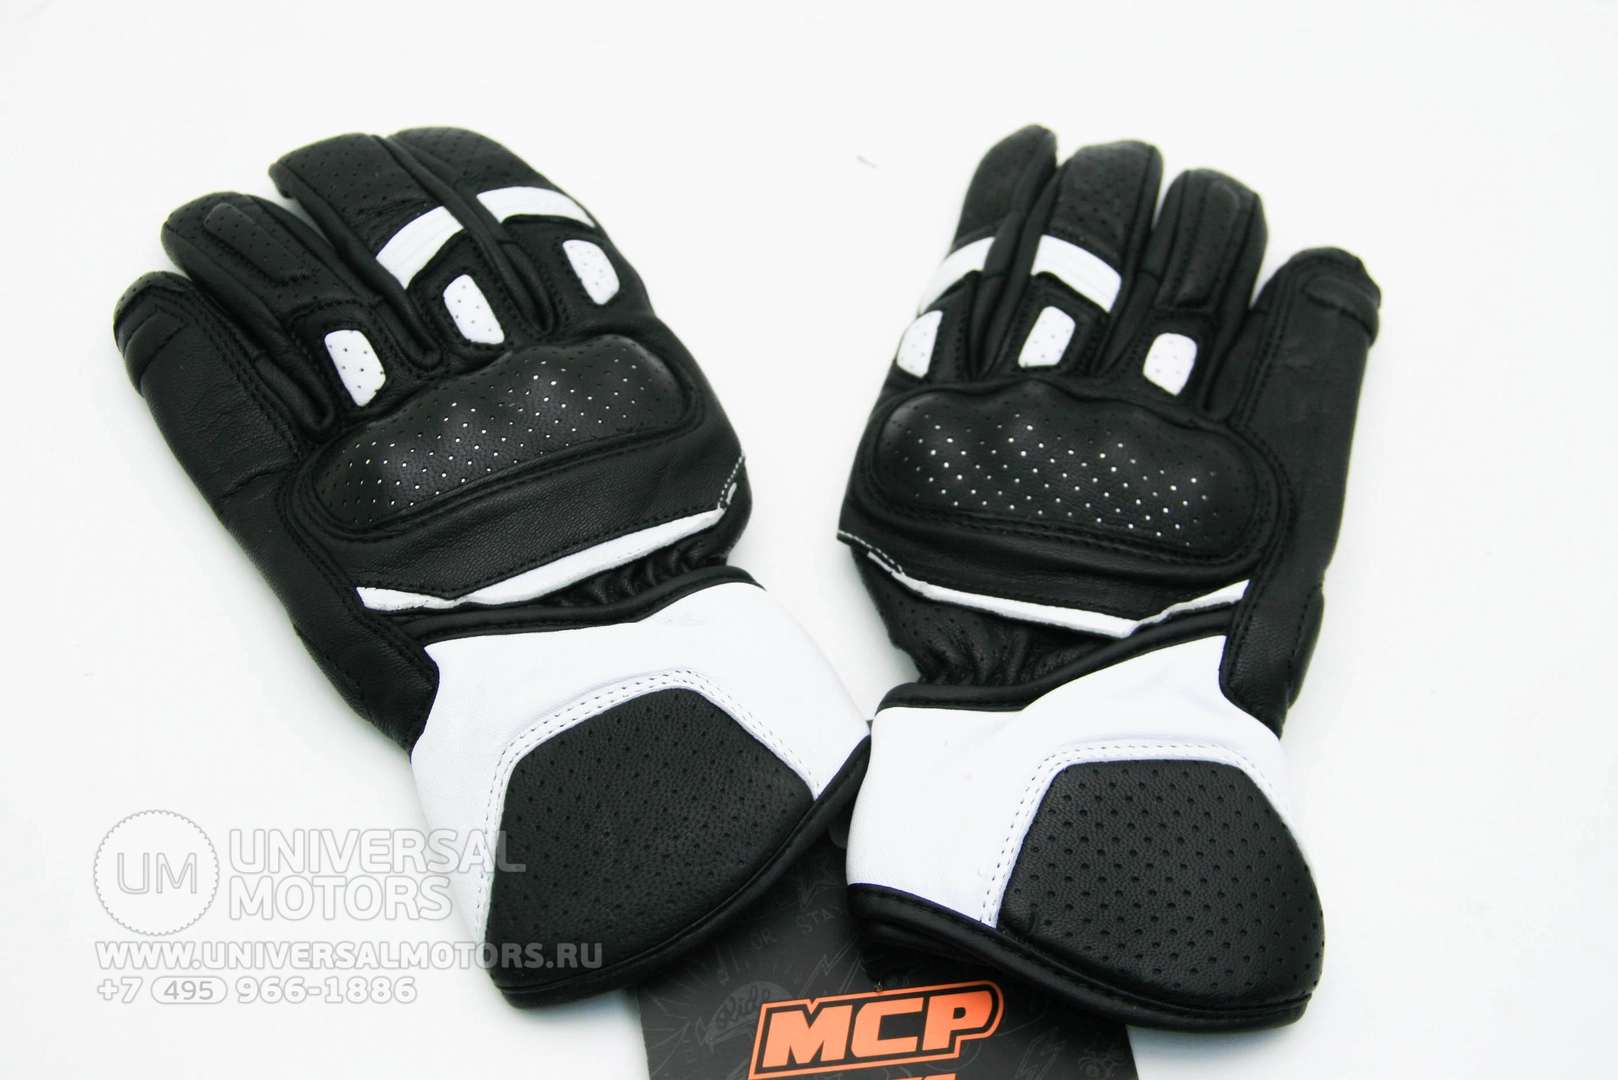 Мотоперчатки MCP Wild Black White, Размер 2xl